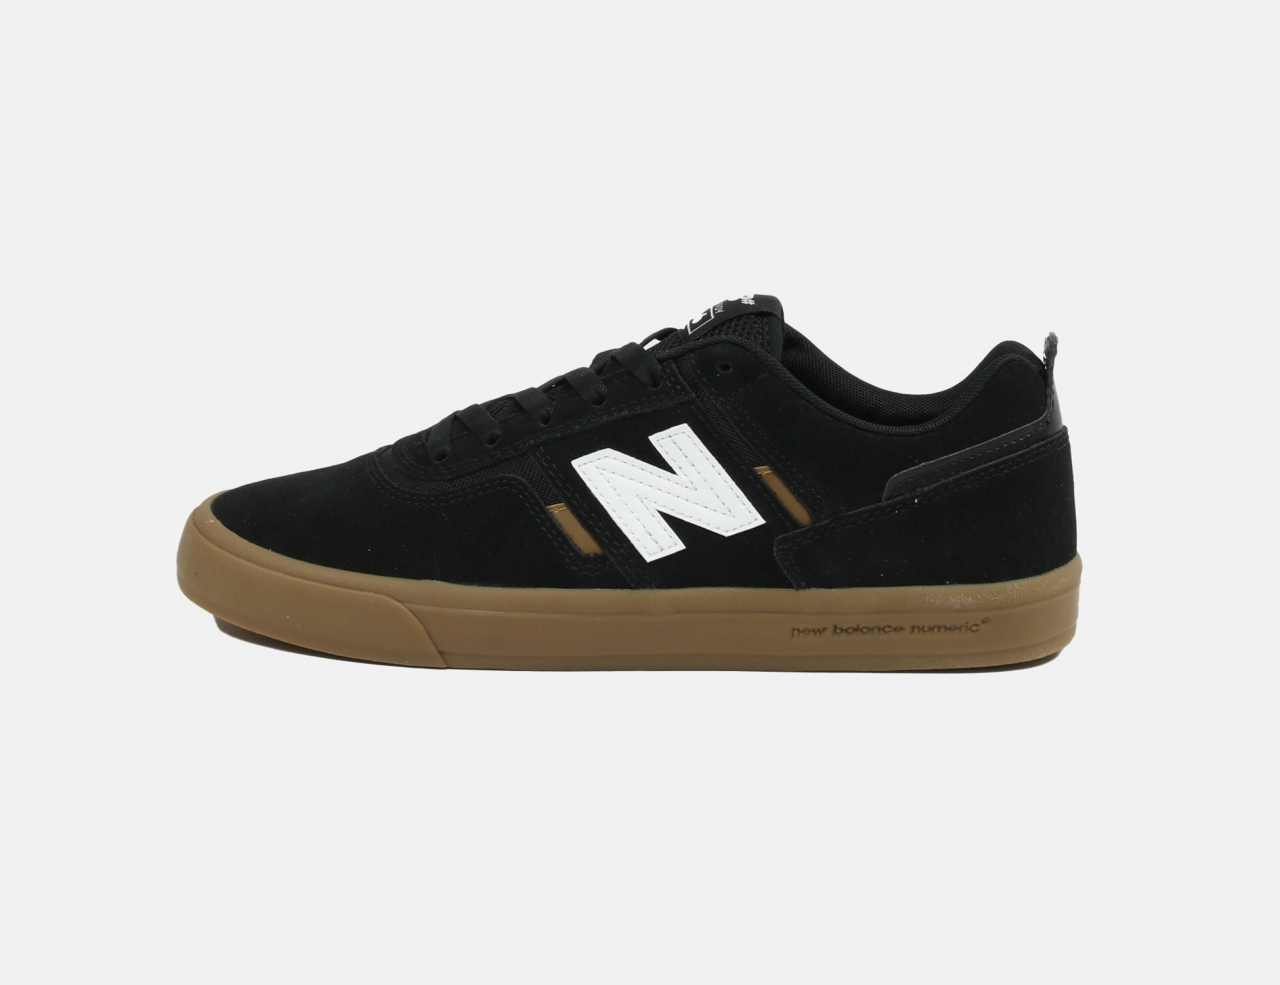 New Balance Numeric 306 Schuh - Black/Gum